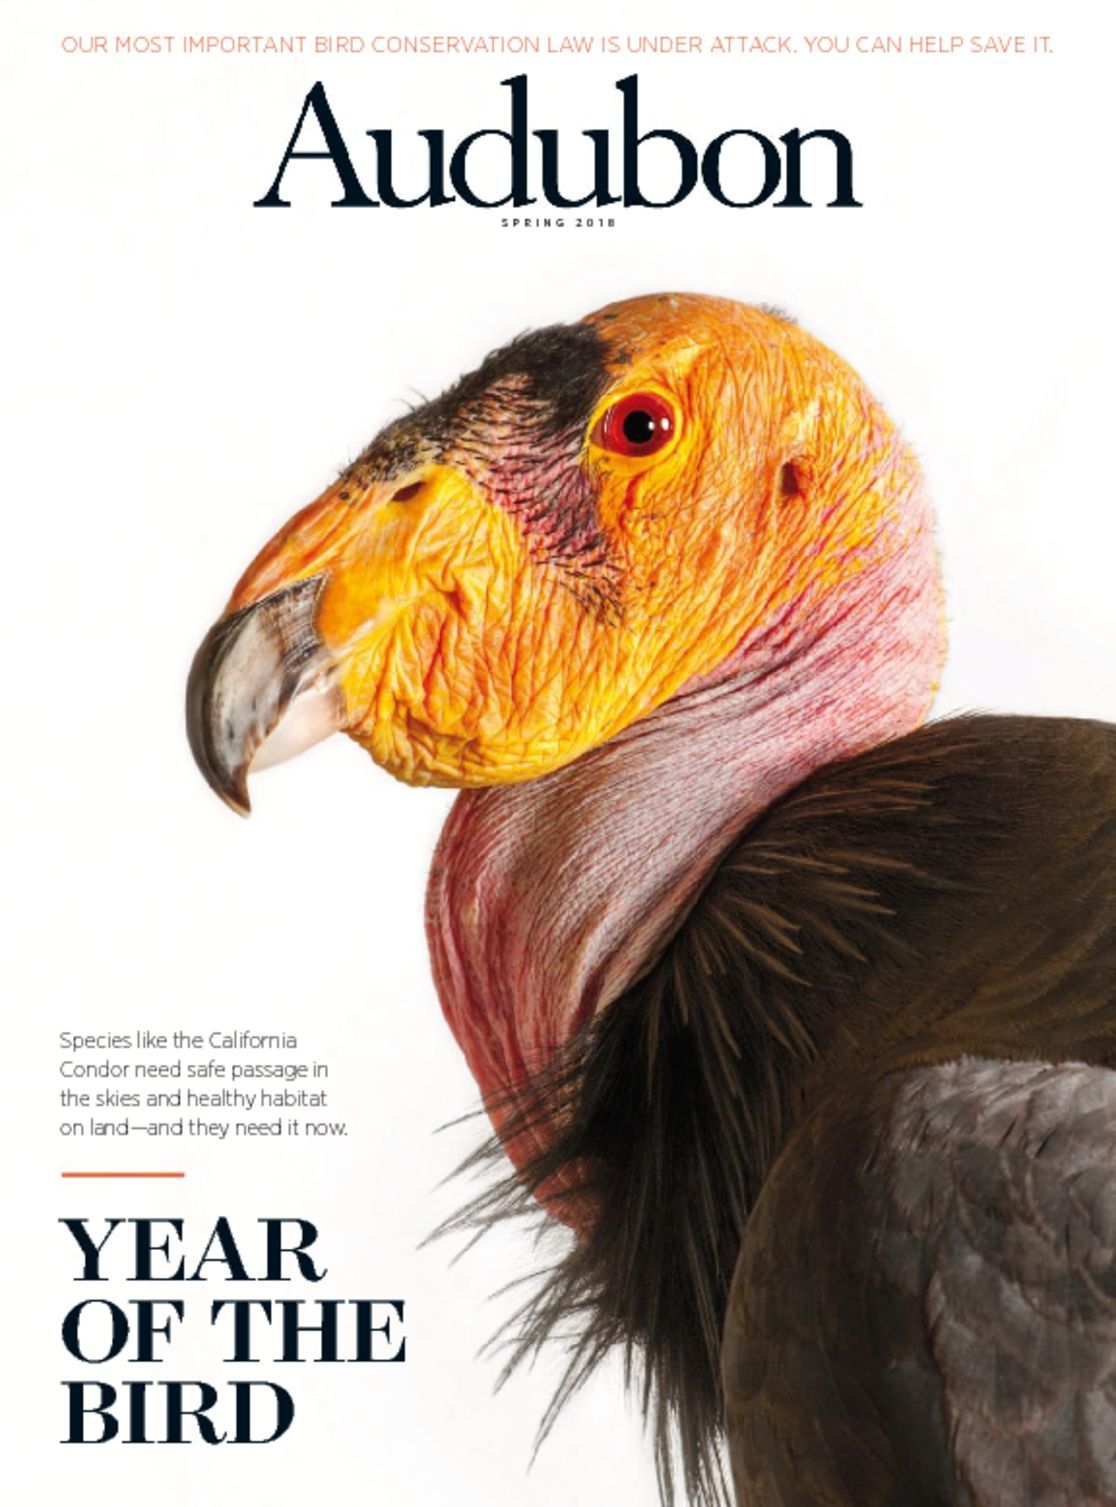 Audubon Magazine Subscription Discount Birds and Nature